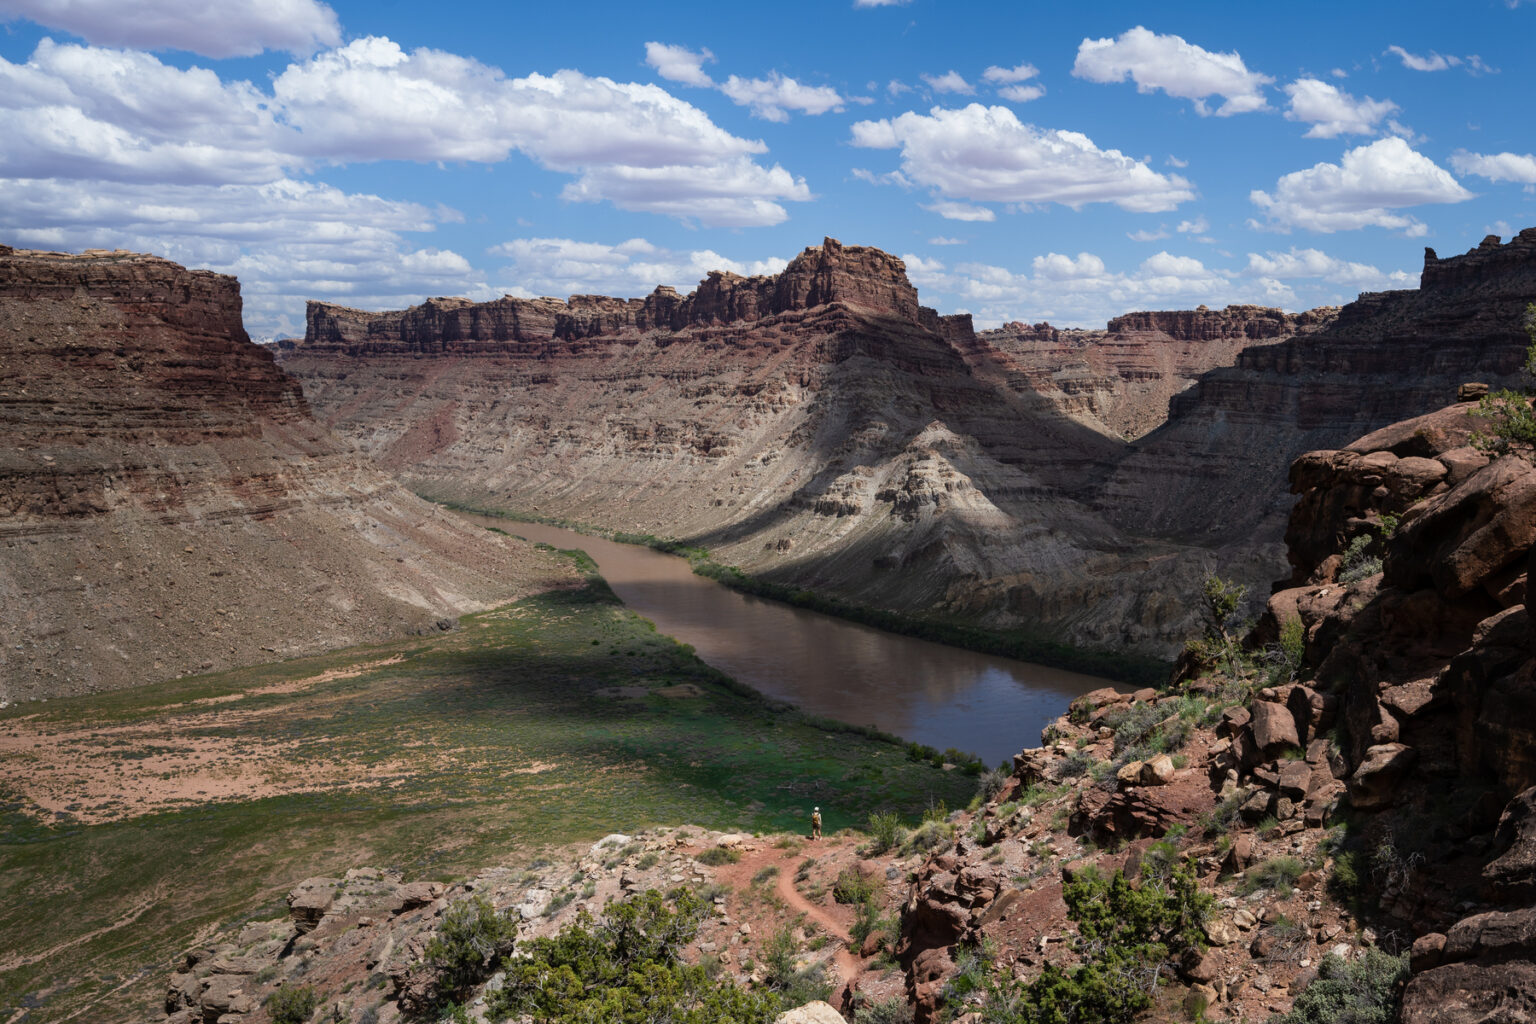 The Colorado River flowing through Canyonlands National Park